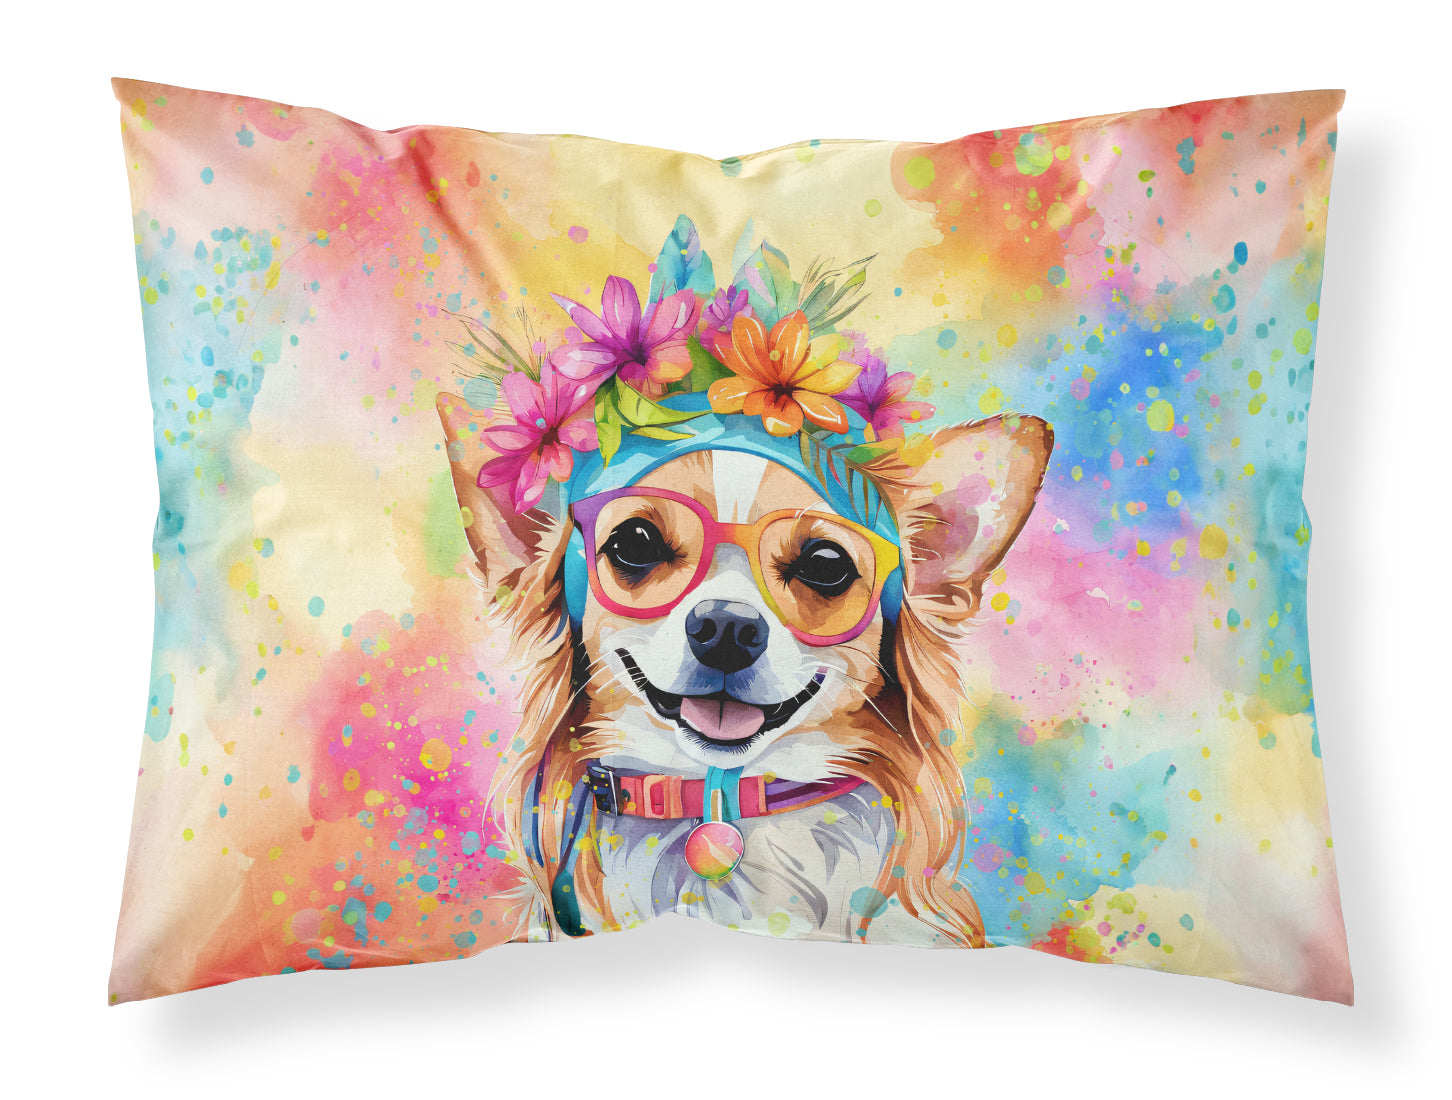 Buy this Chihuahua Hippie Dawg Standard Pillowcase